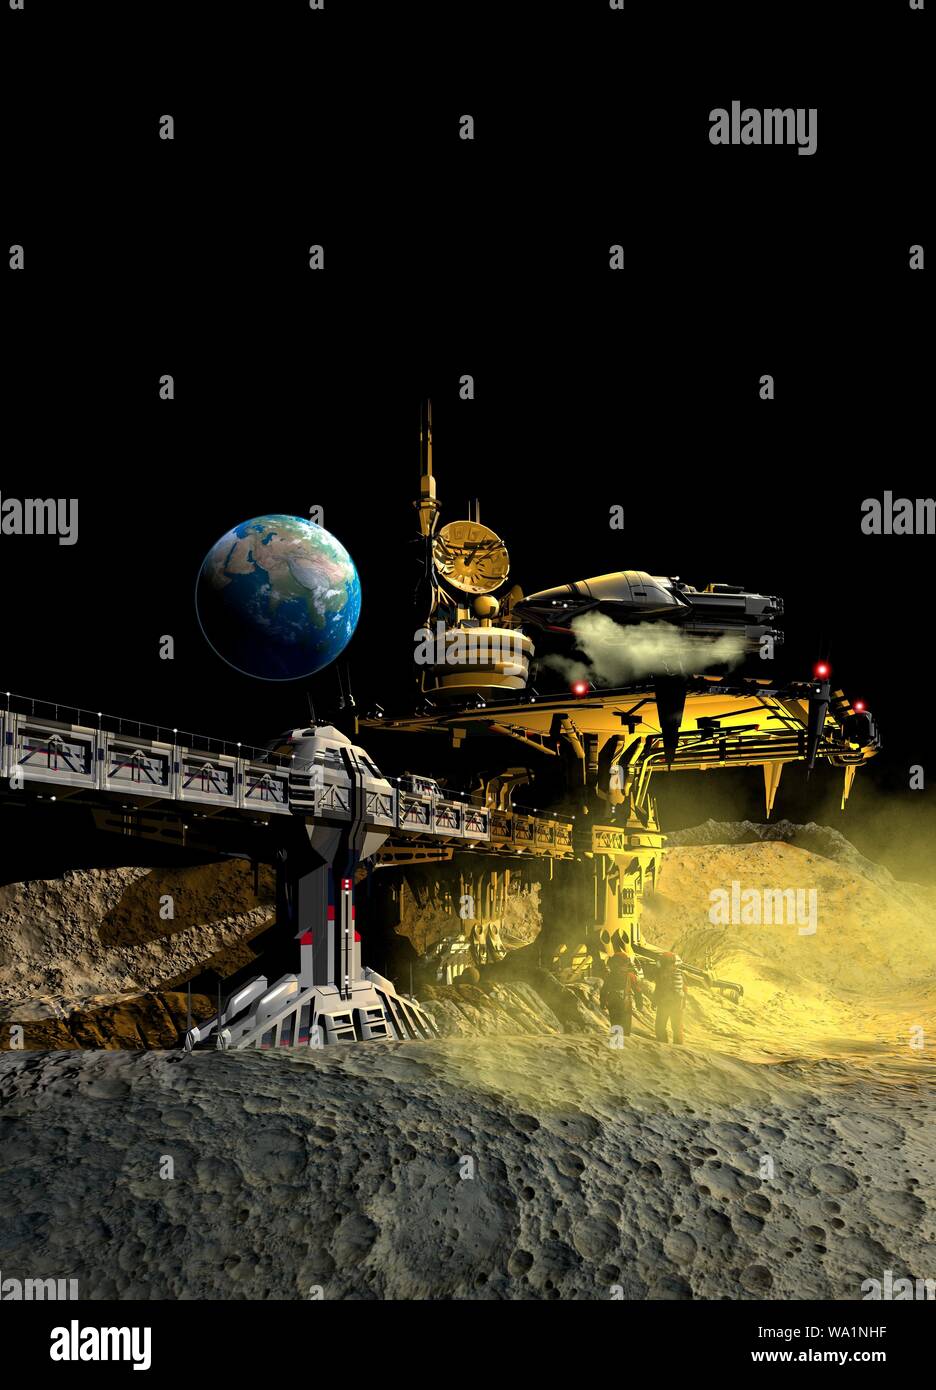 Moon base with spaceship landing, illustration. Stock Photo